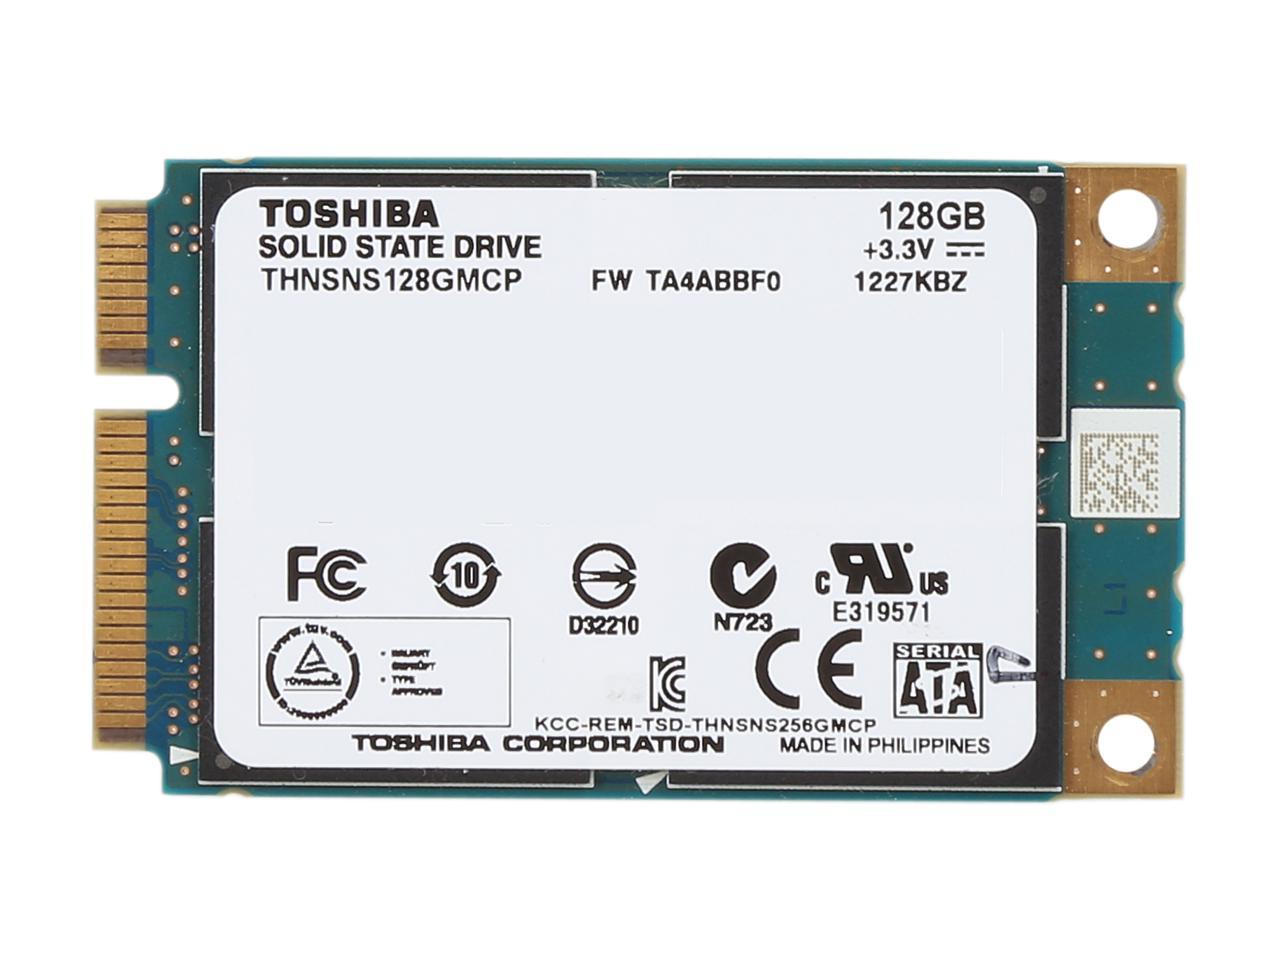 TOSHIBA mSATA 128GB Internal SSD - Newegg.com